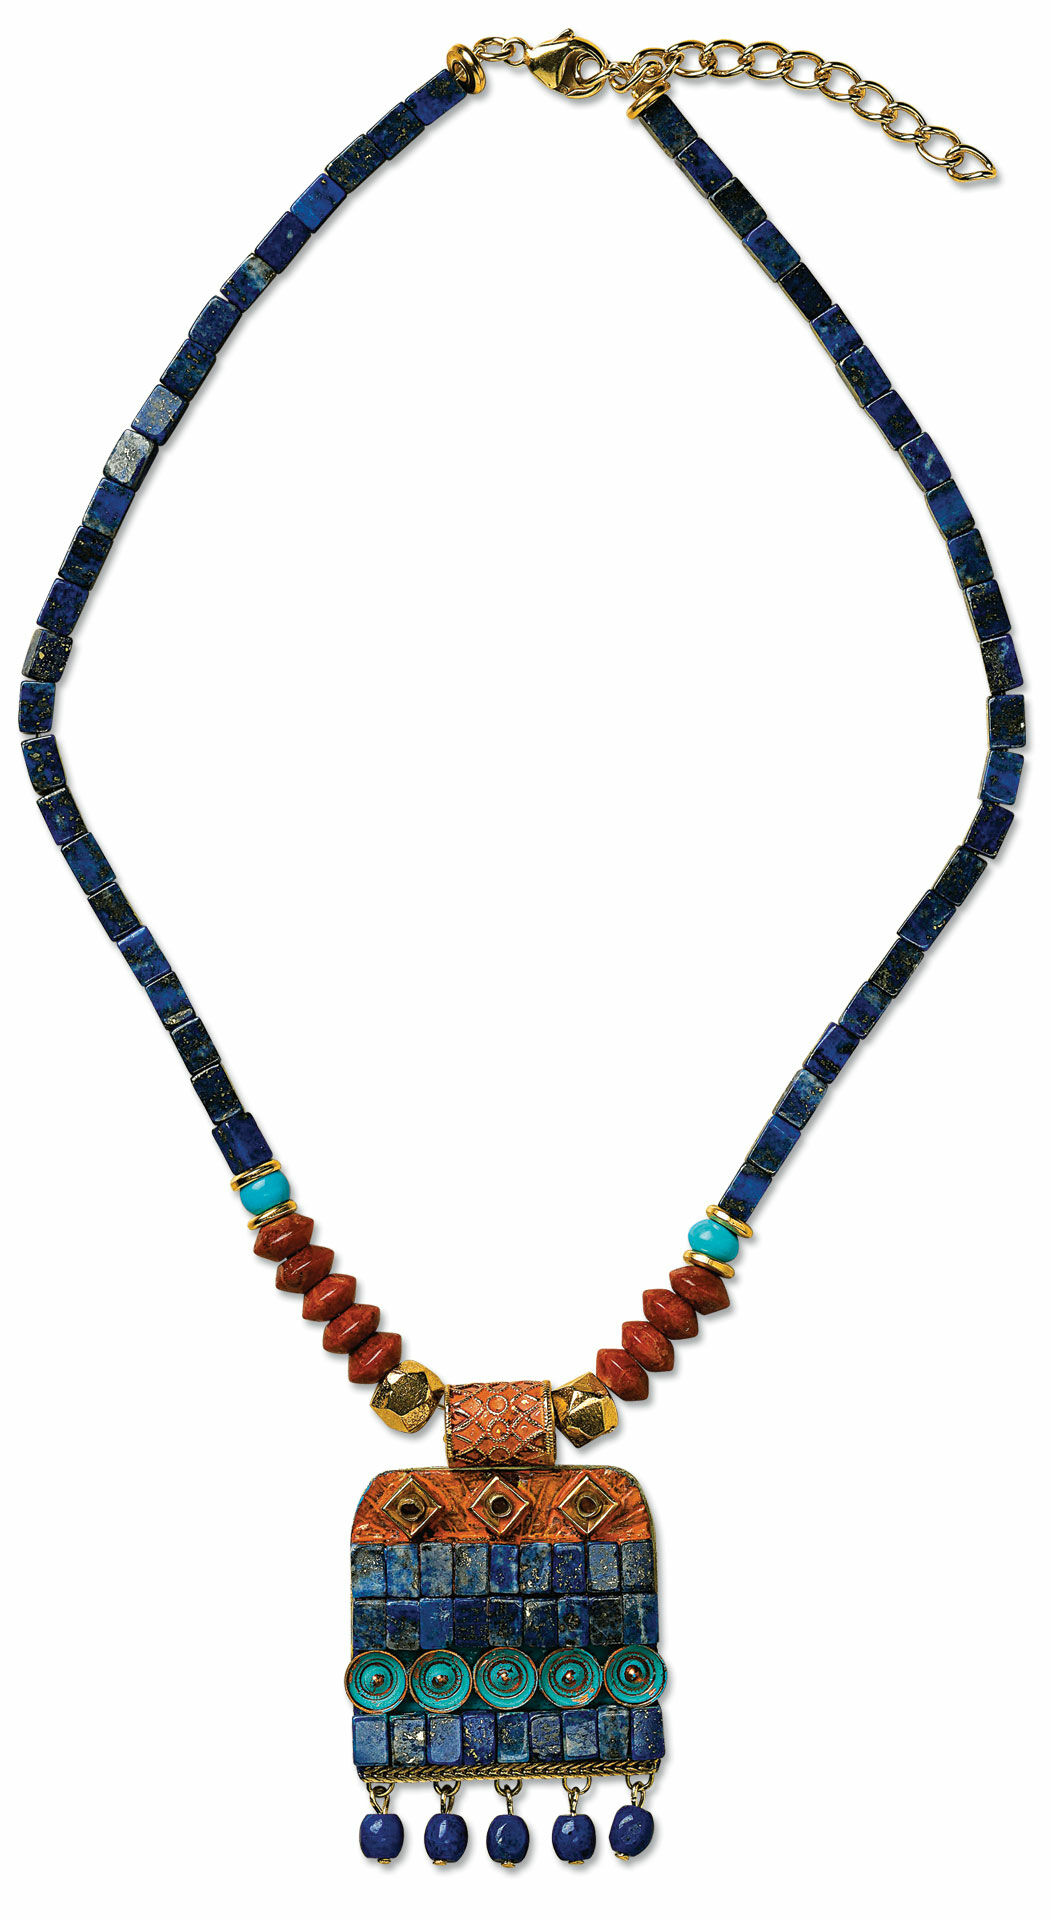 Necklace "Hathor" by Petra Waszak